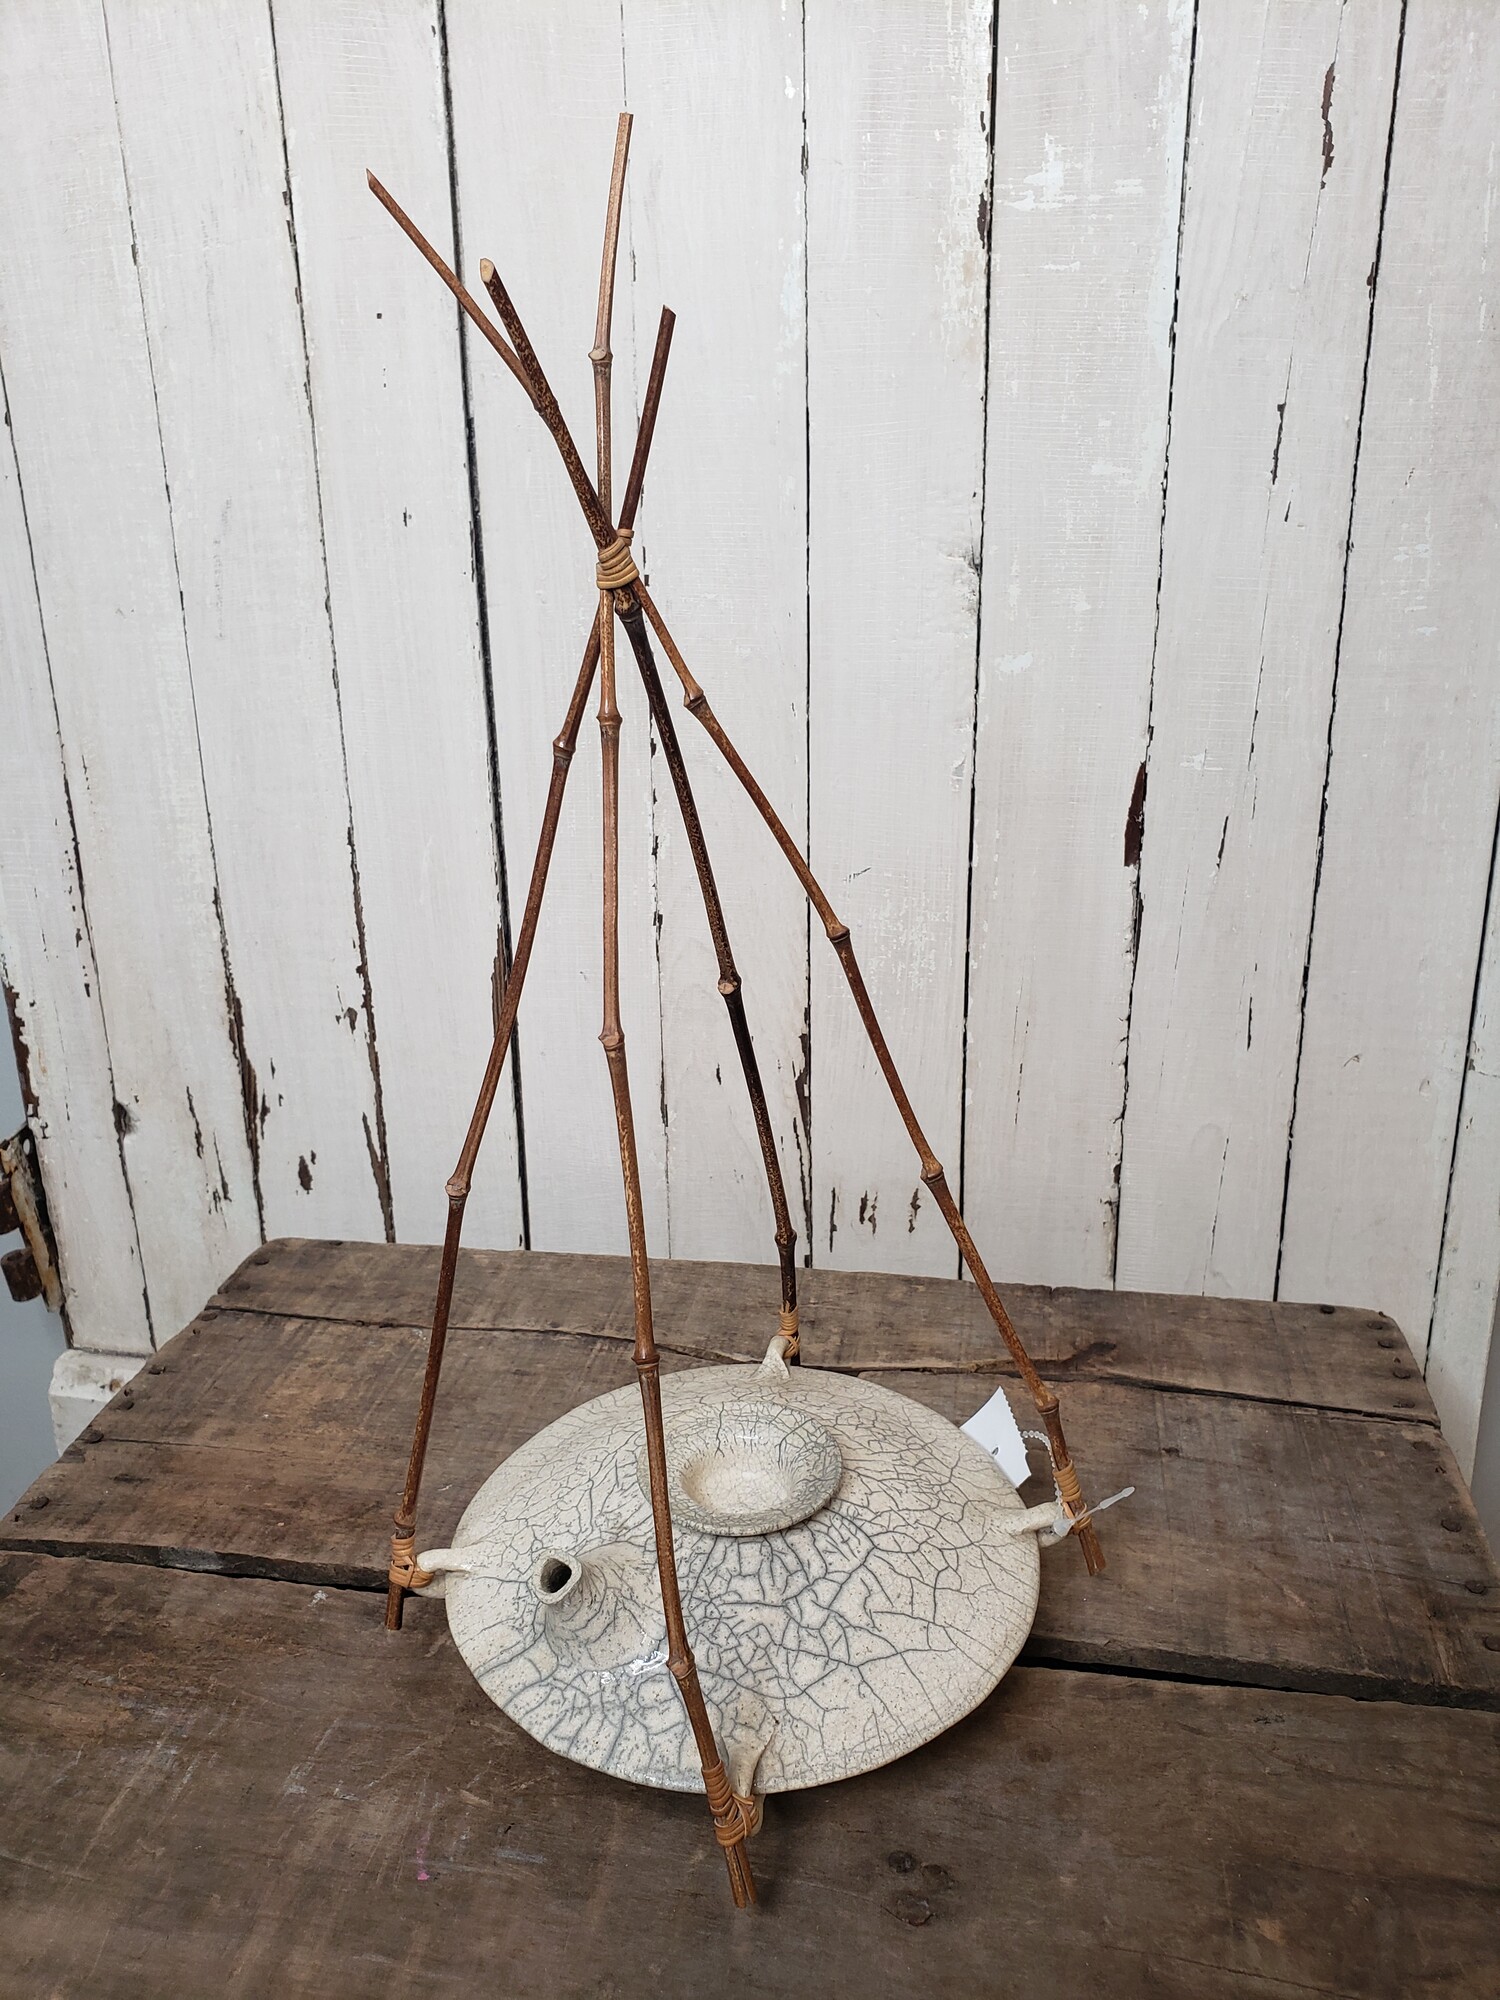 Japanese Ceramic Teapot, Handmade with Bamboo Handles.